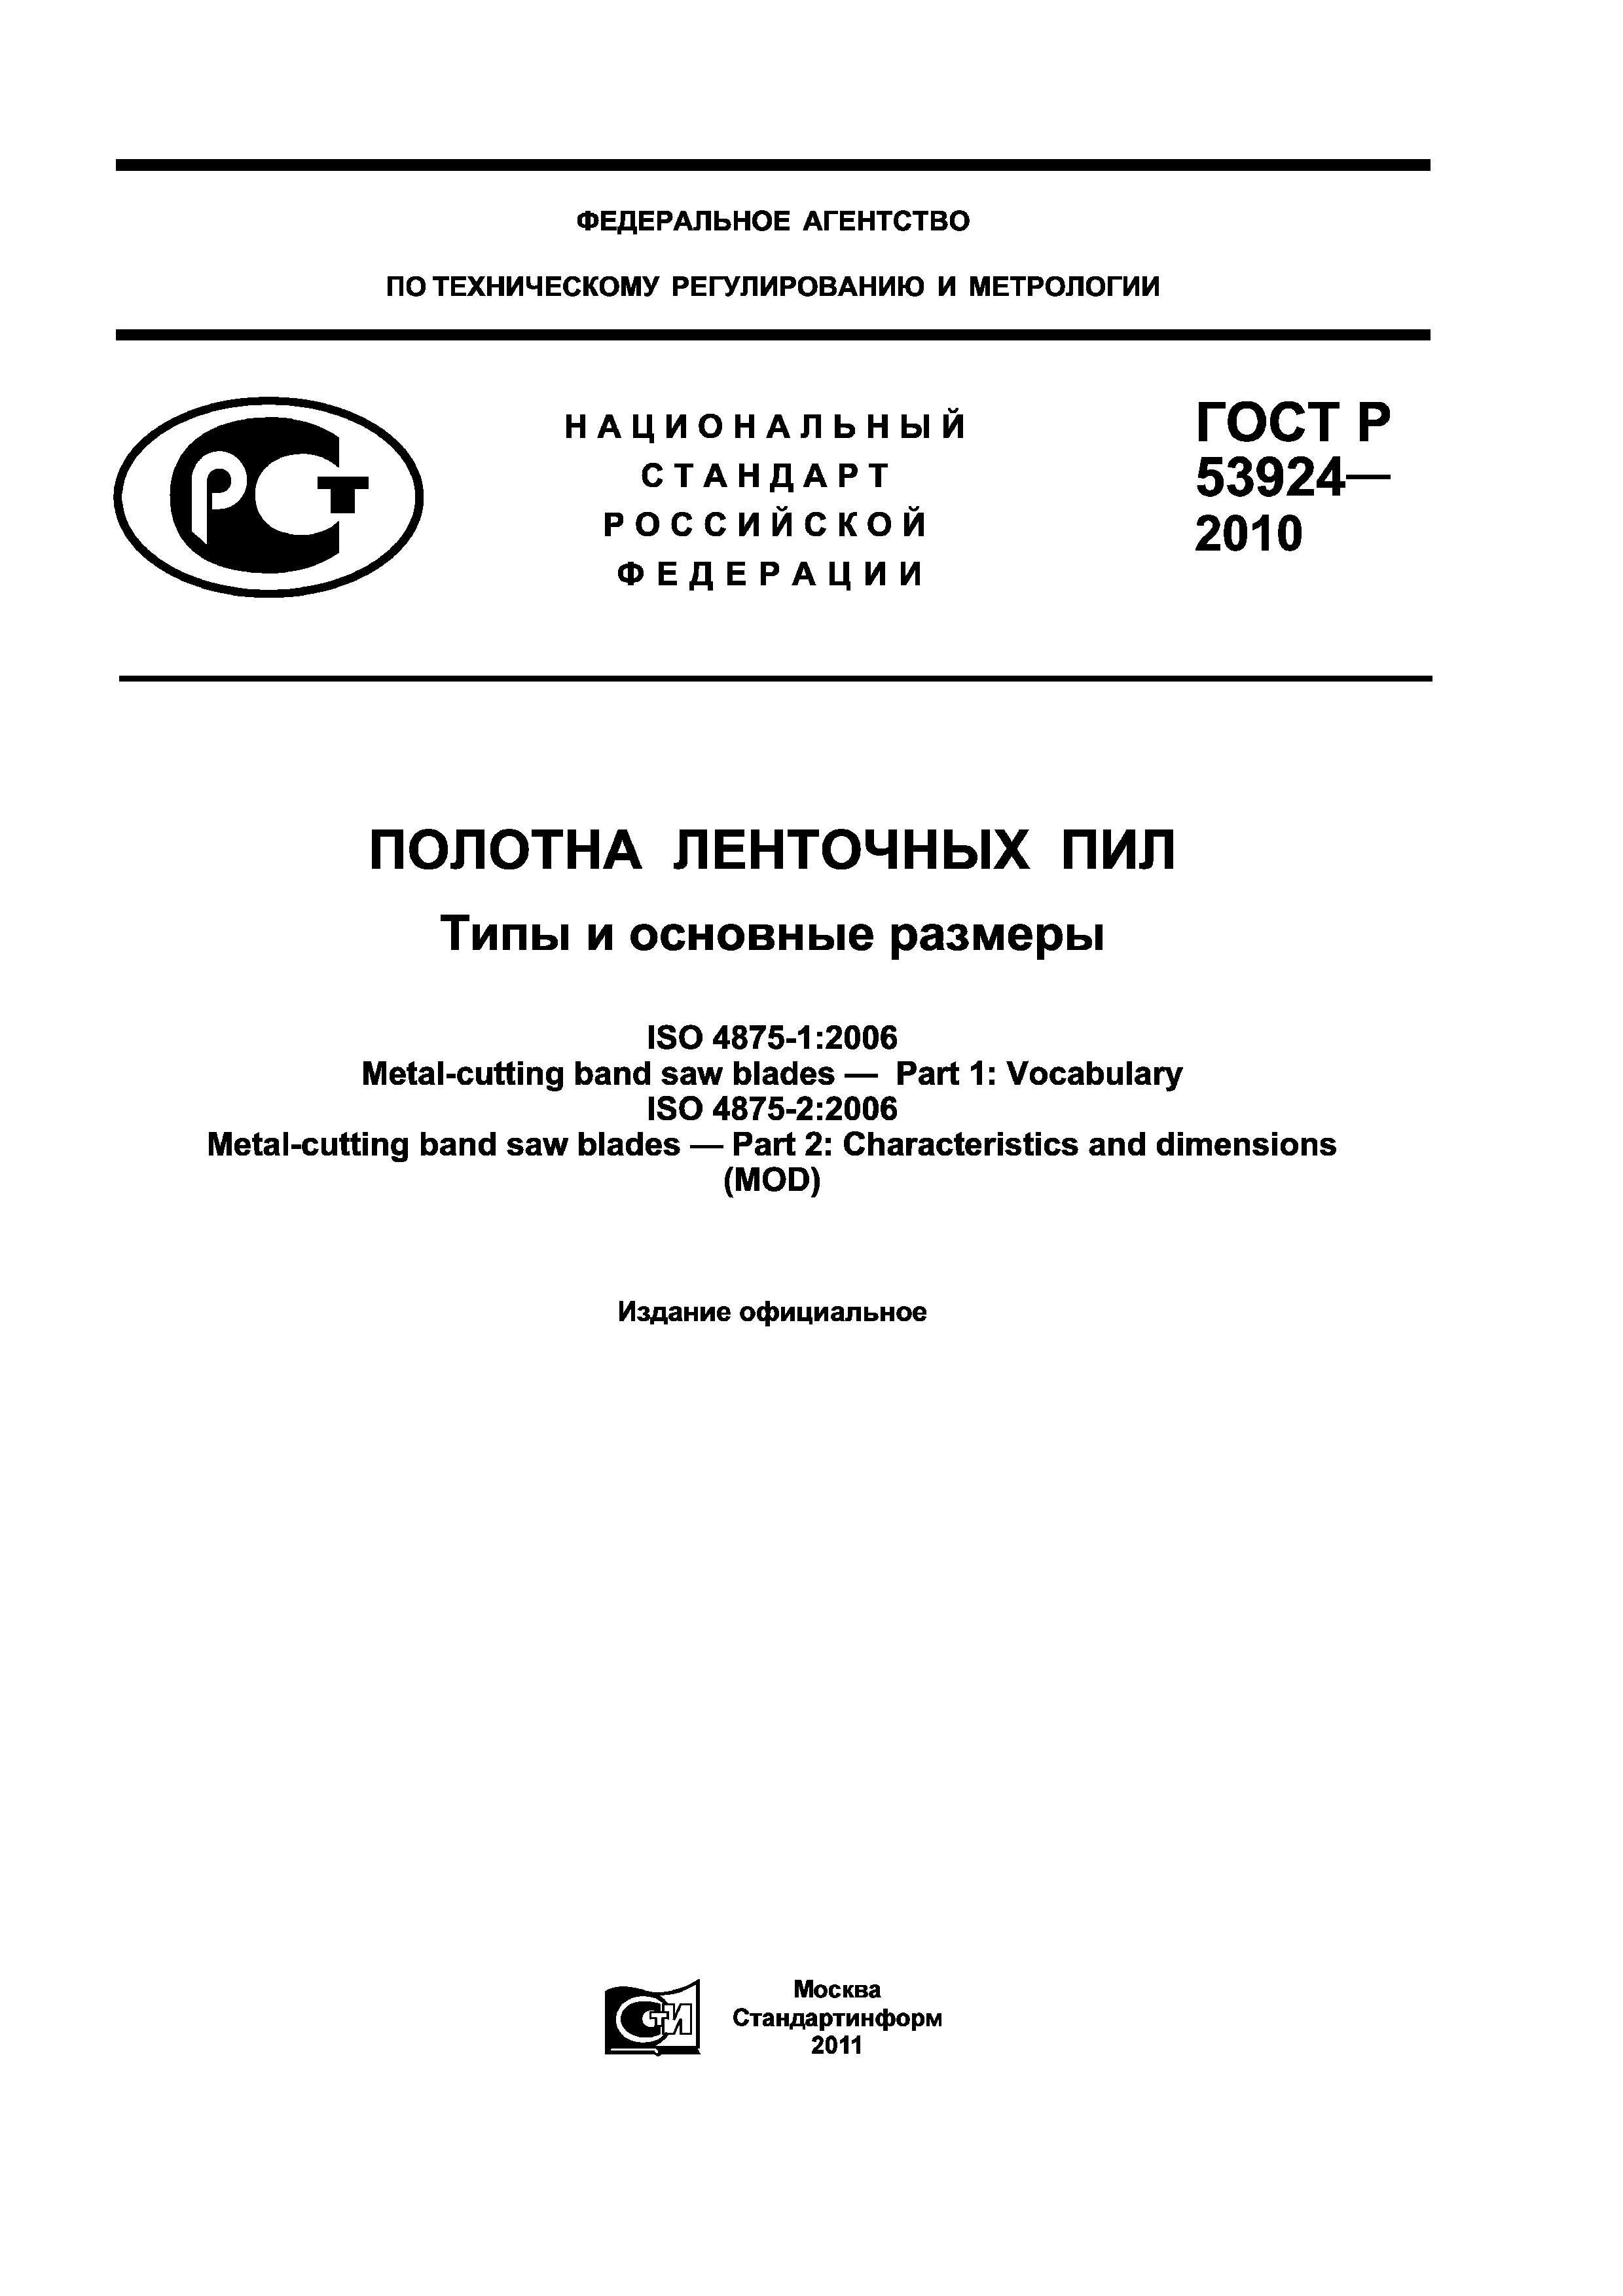 ГОСТ Р 53924-2010